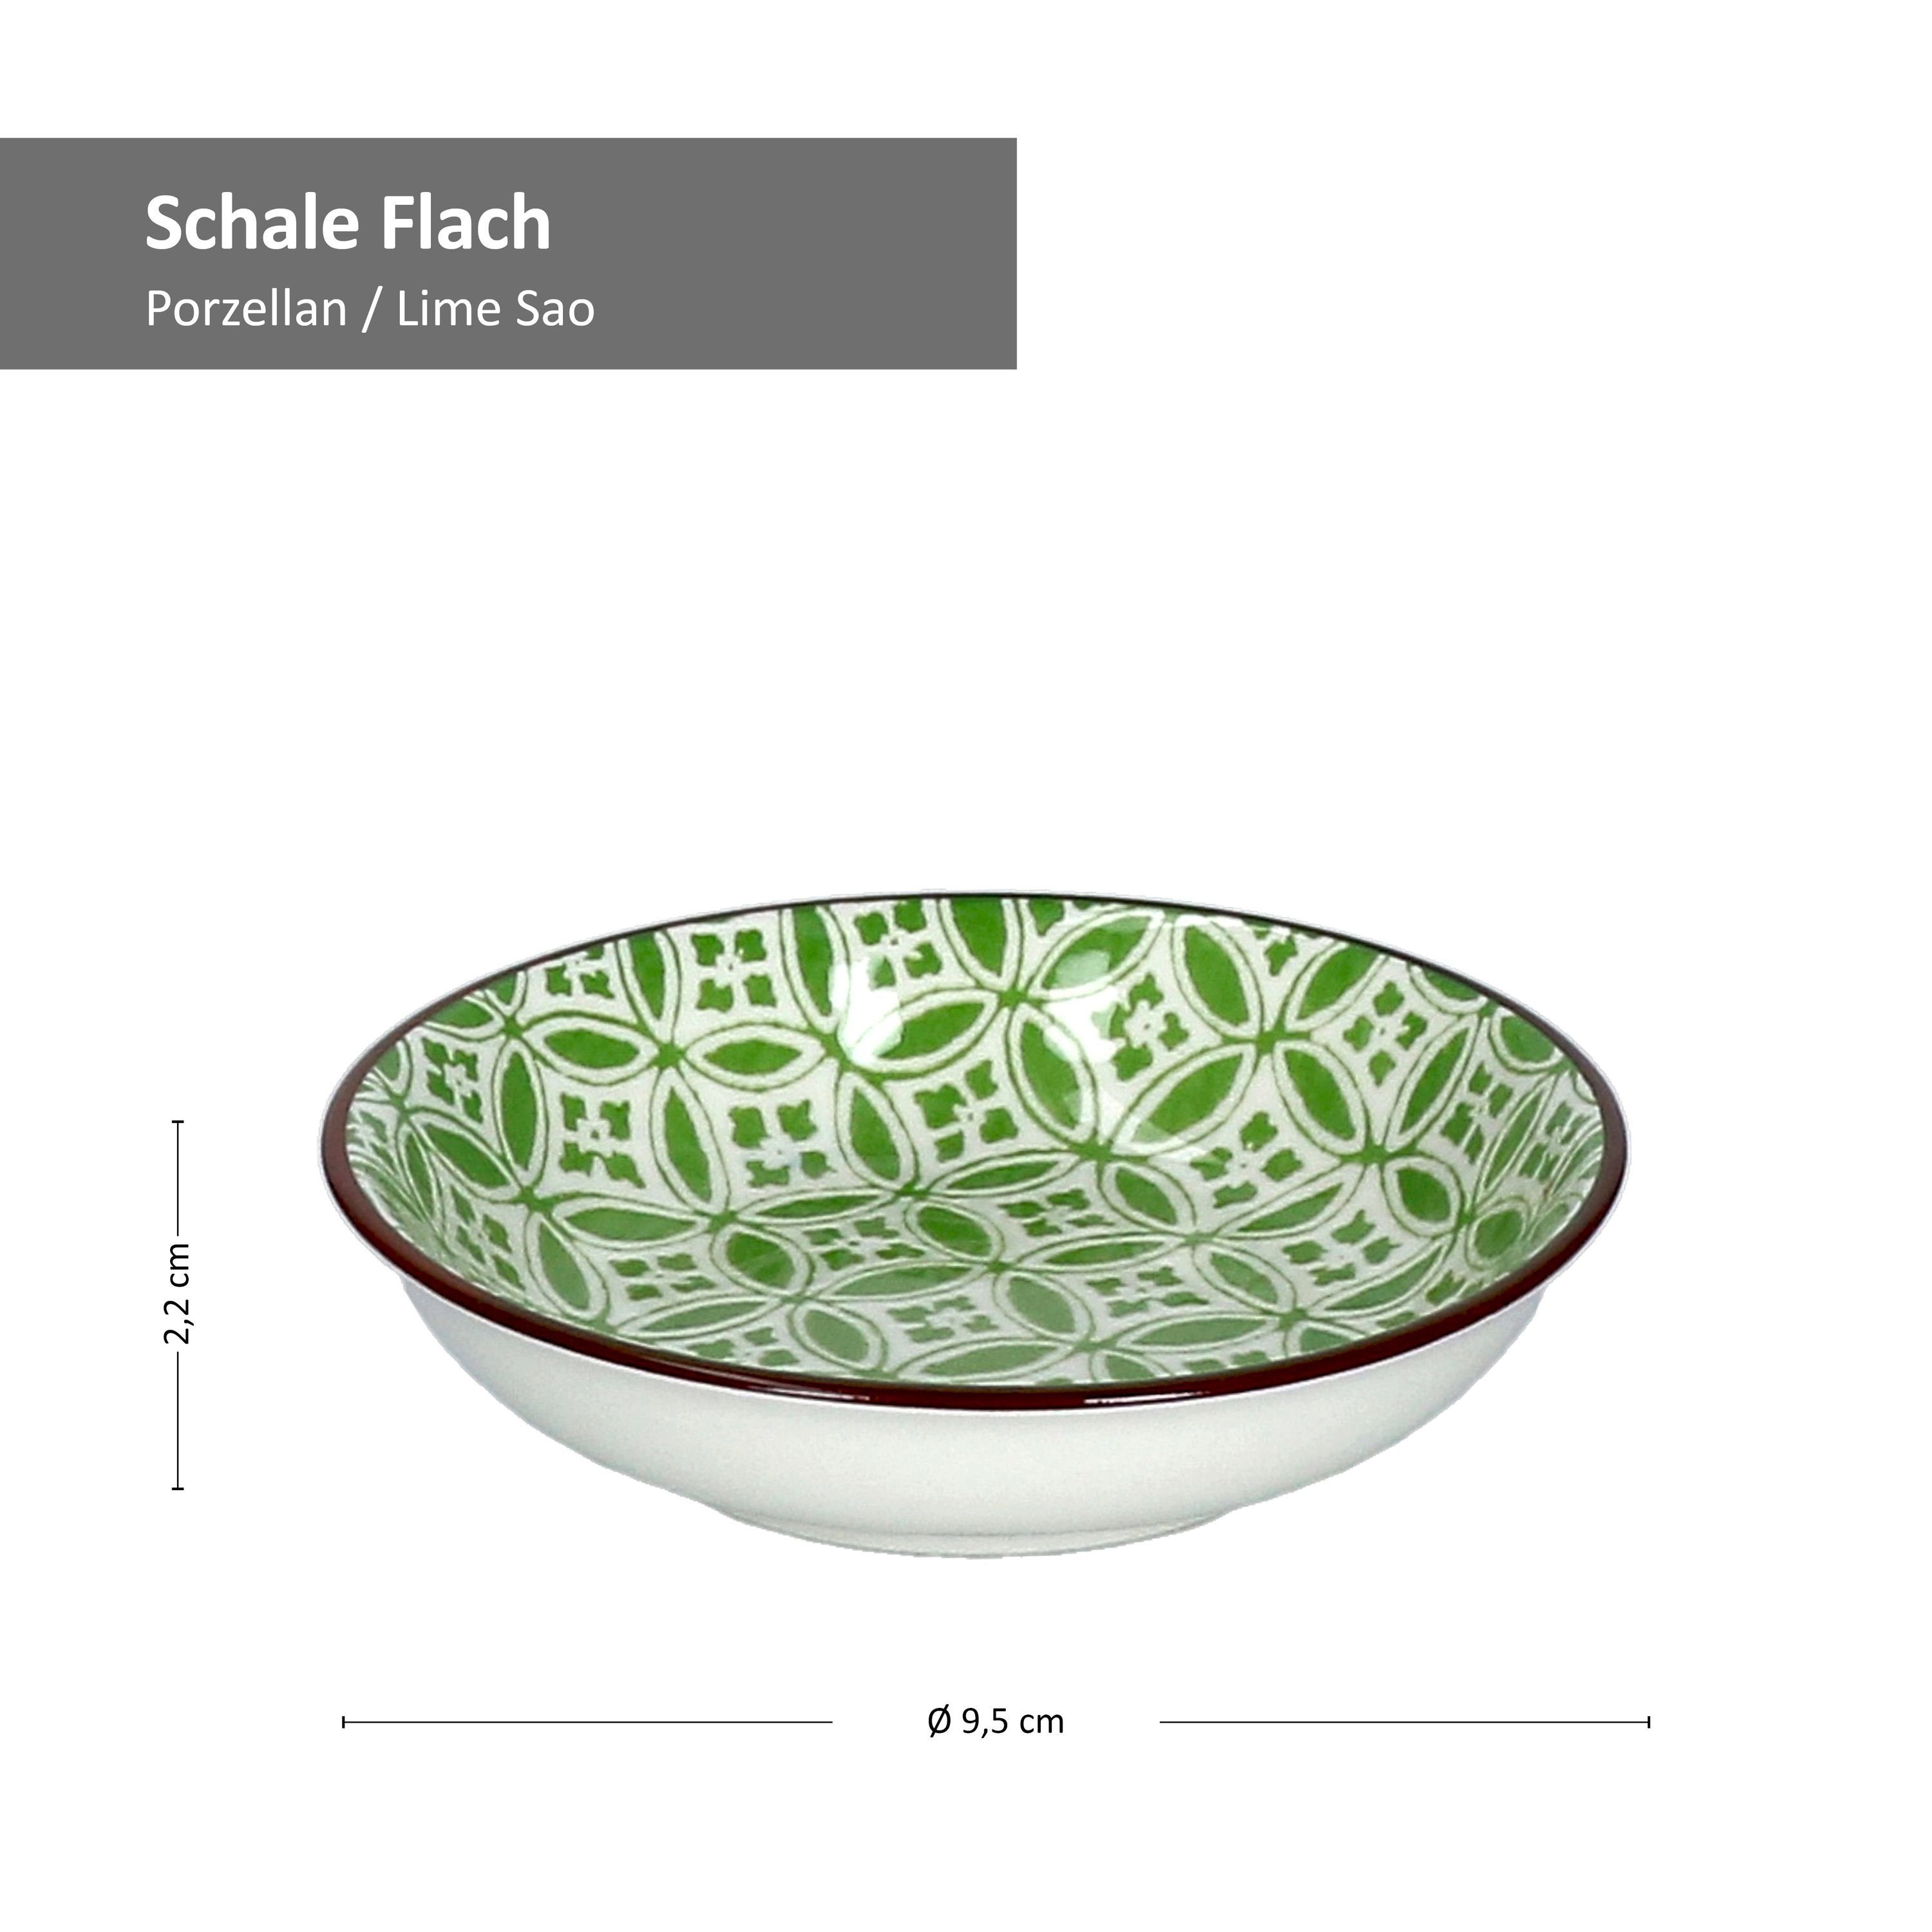 & Lime 4er Breker Schale Set Ritzenhoff Ritzenhoff flach - 9,5cm 744910, Servierschale Porzellan Sao